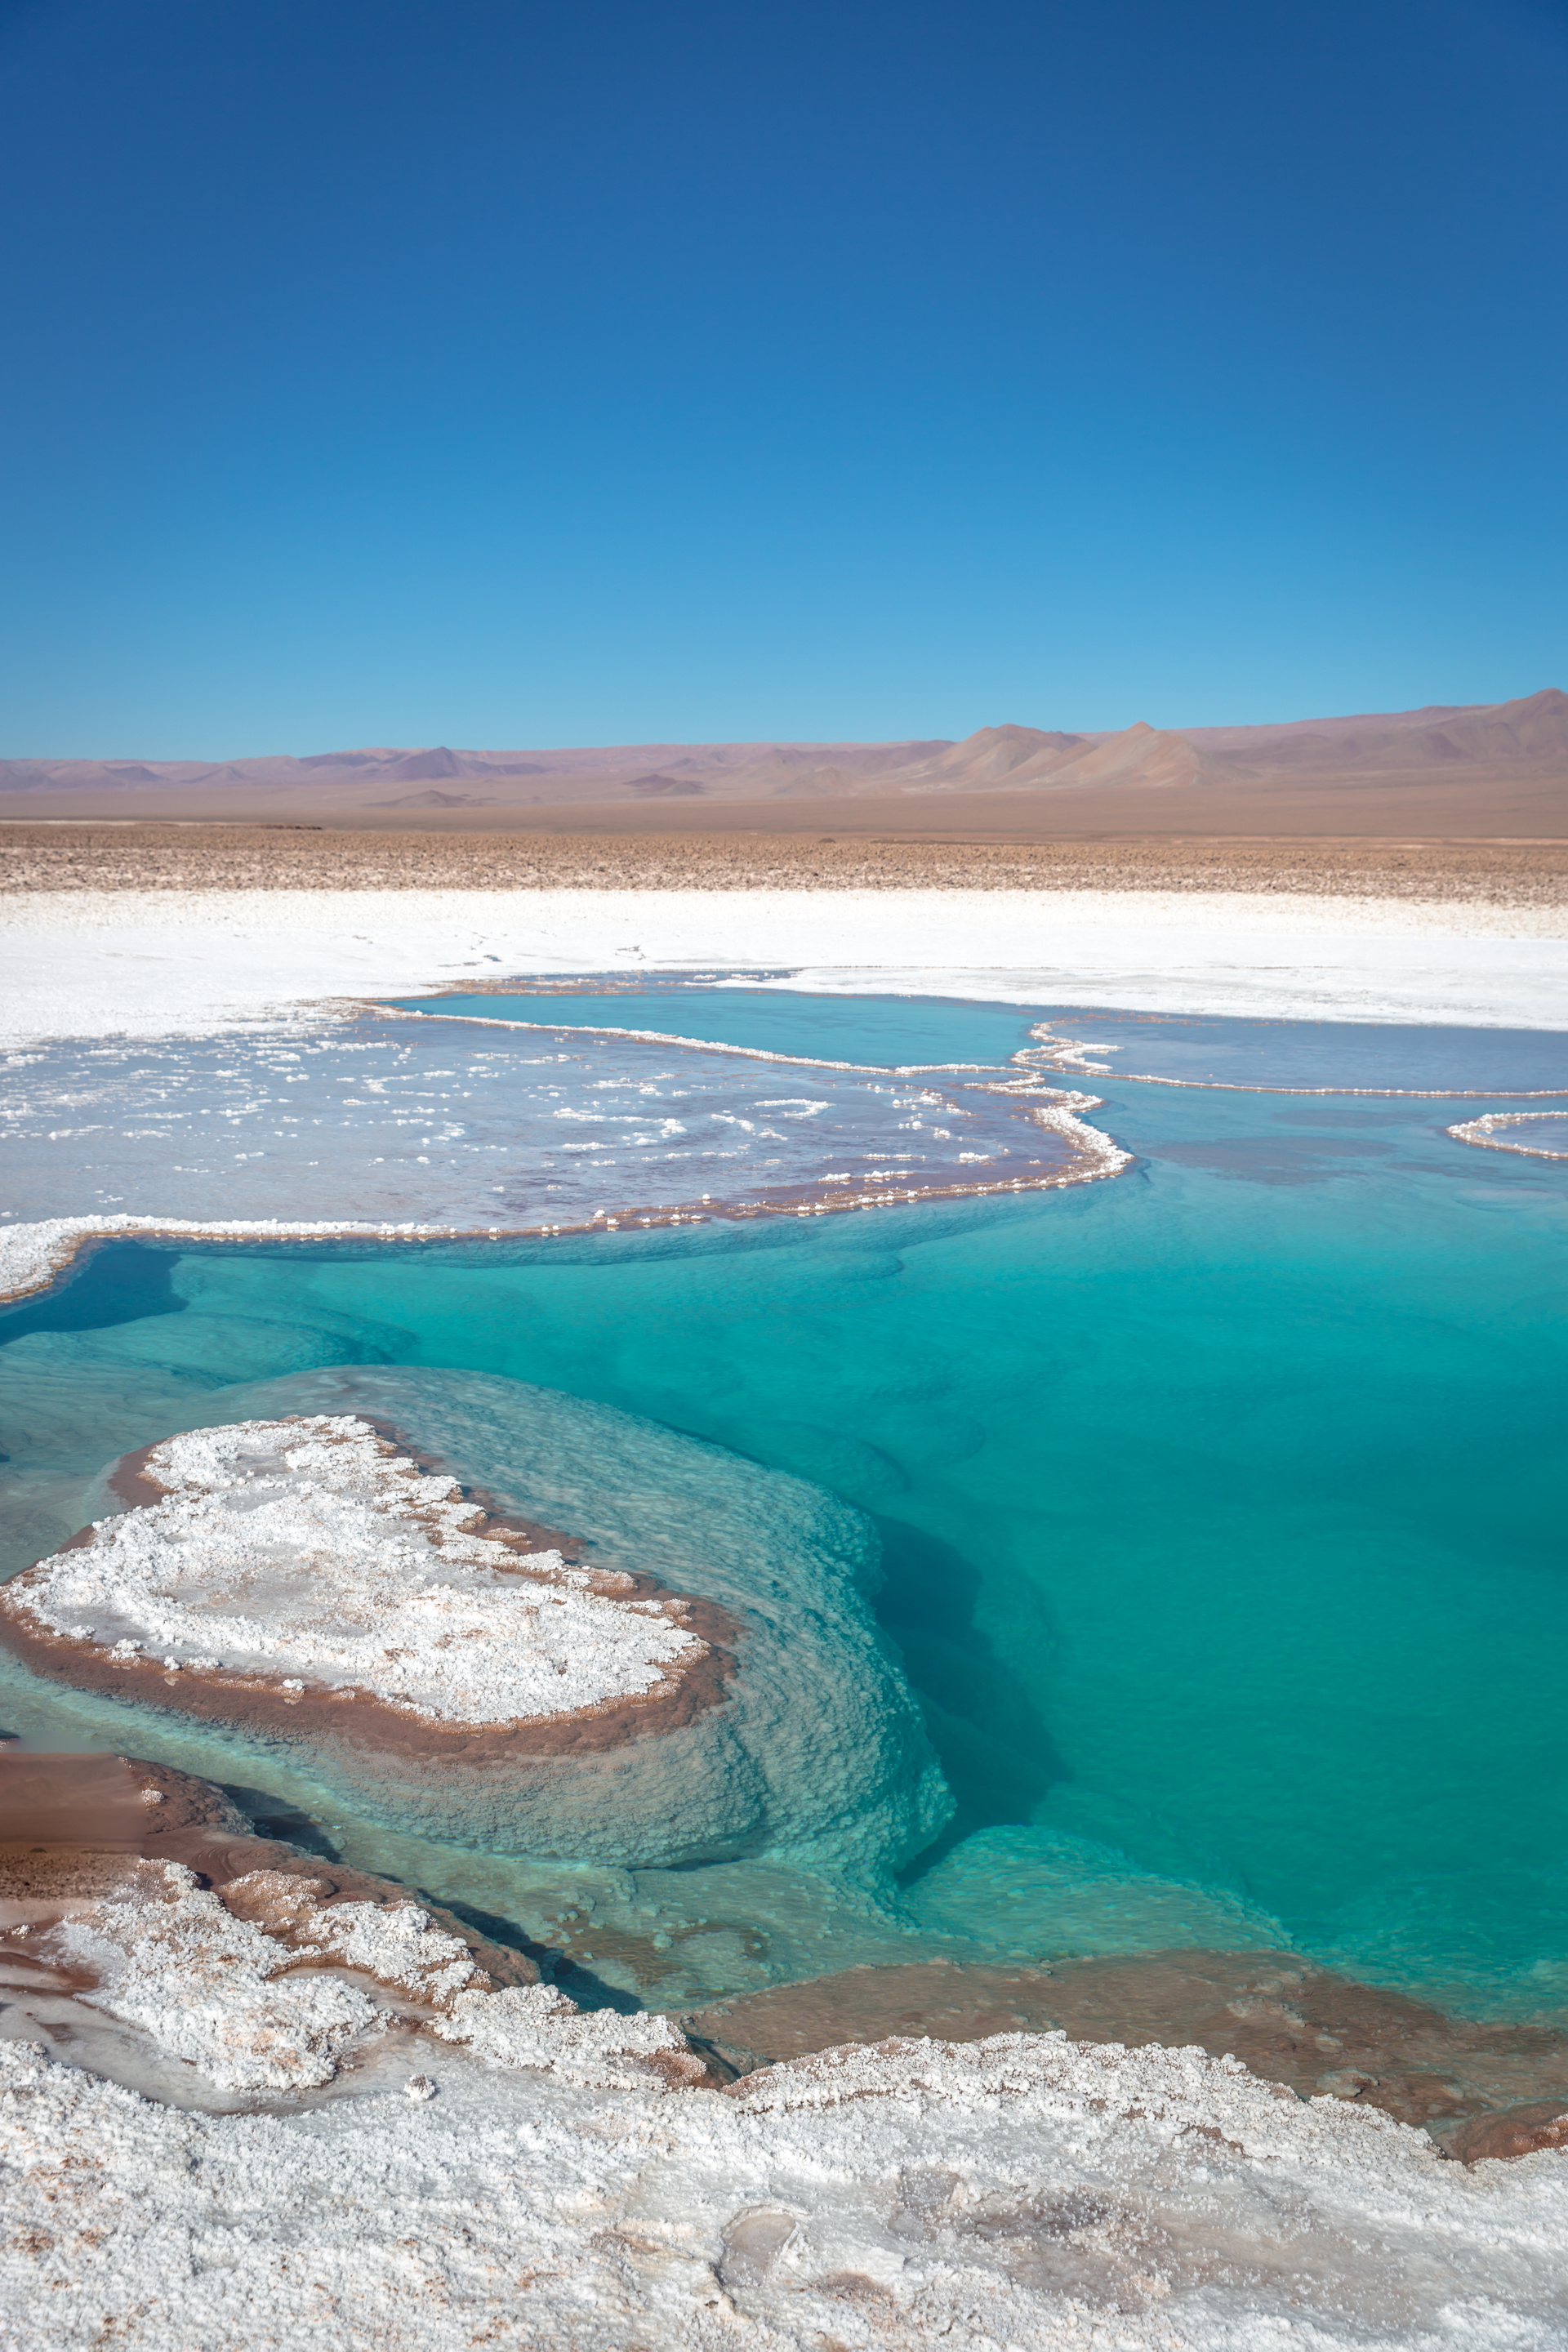 Salt formations in northern Chile - Atacama desert